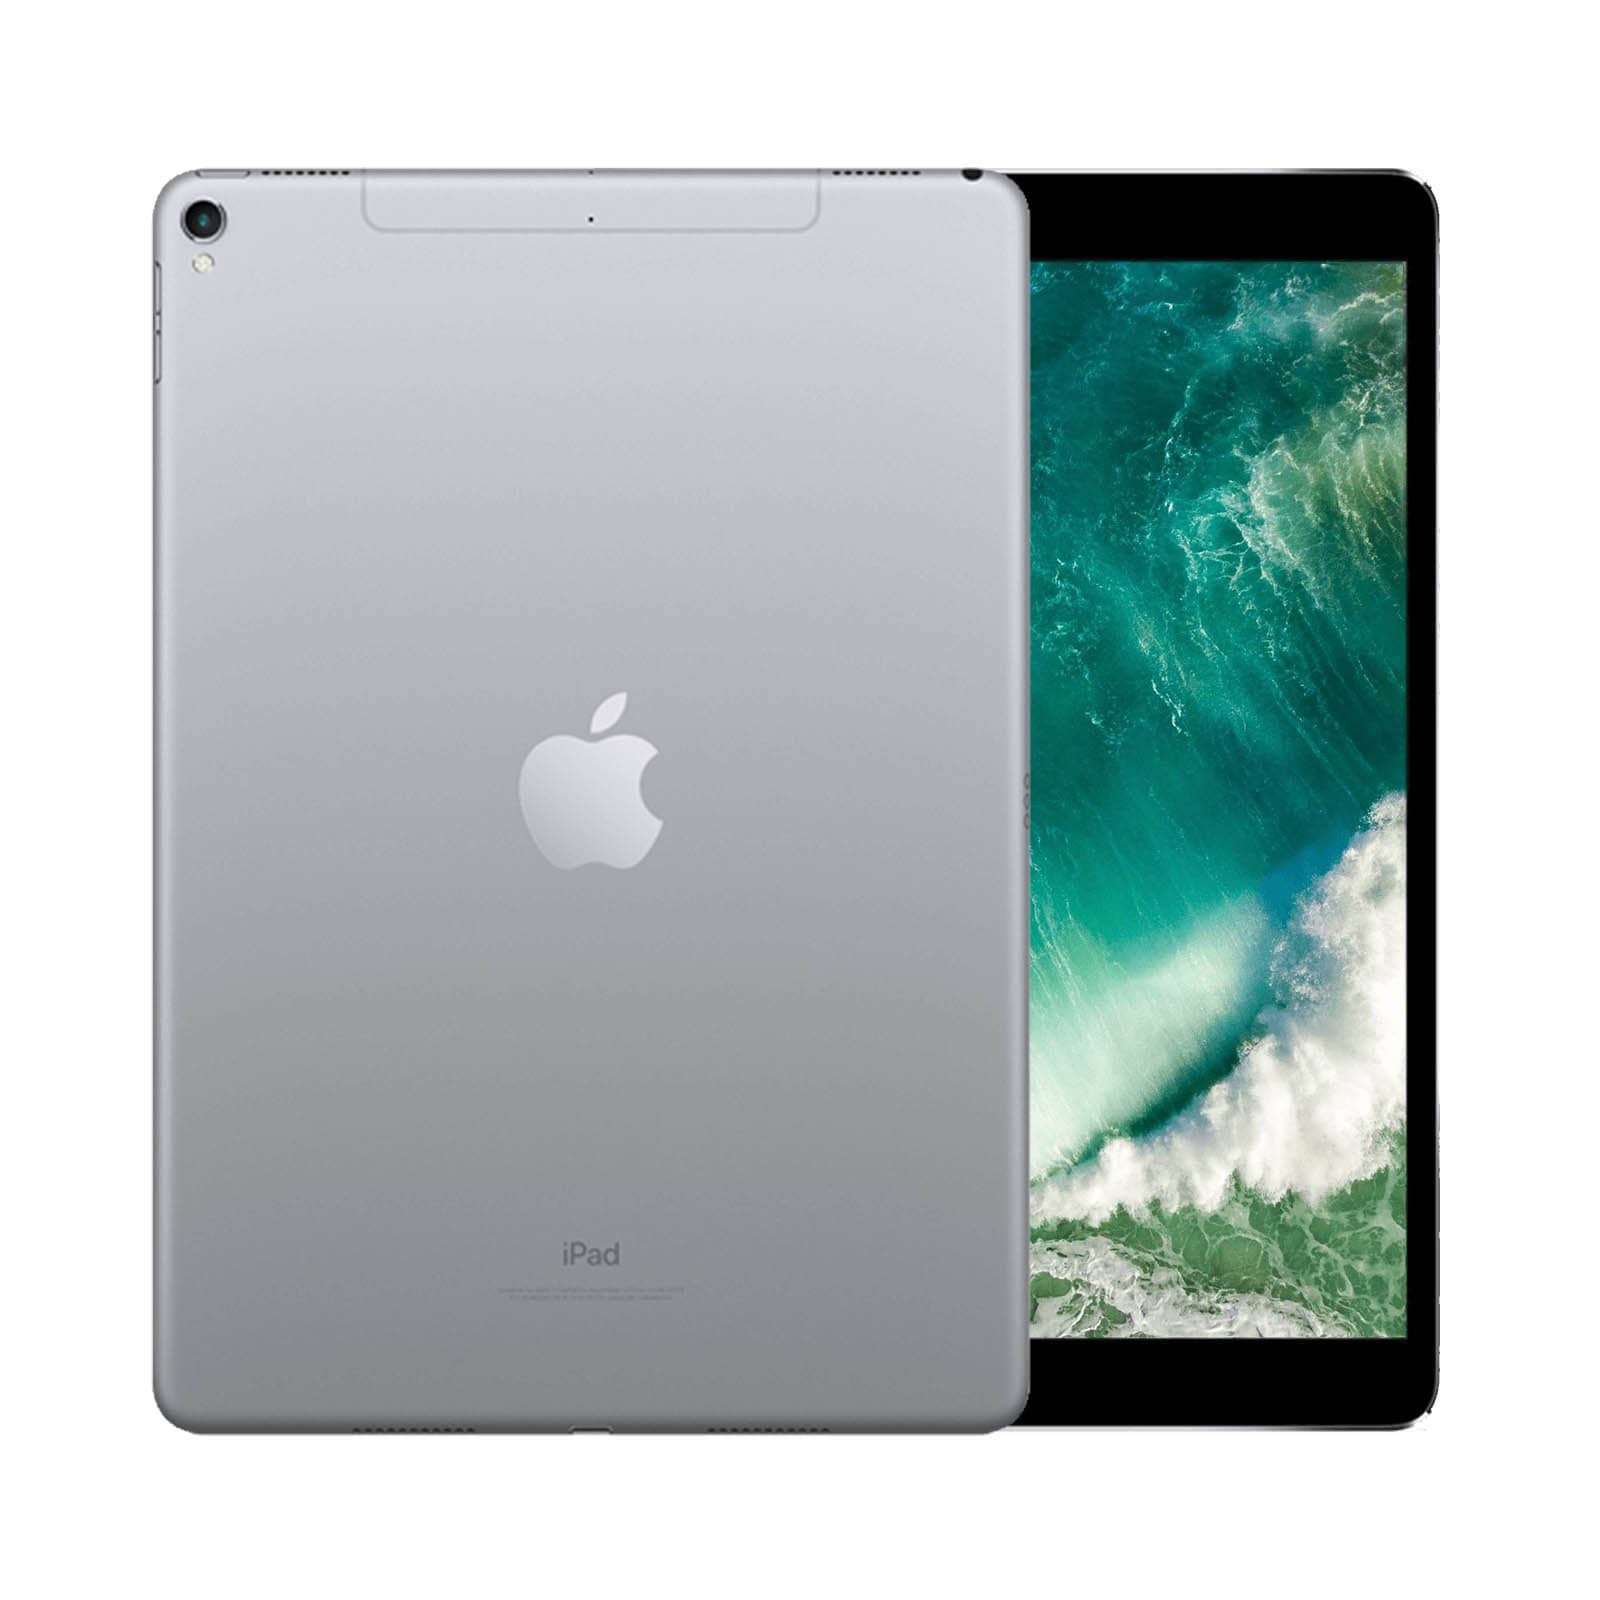 iPad Pro 10.5 Inch 64GB Space Grey Very Good - Unlocked 64GB Space Grey Very Good